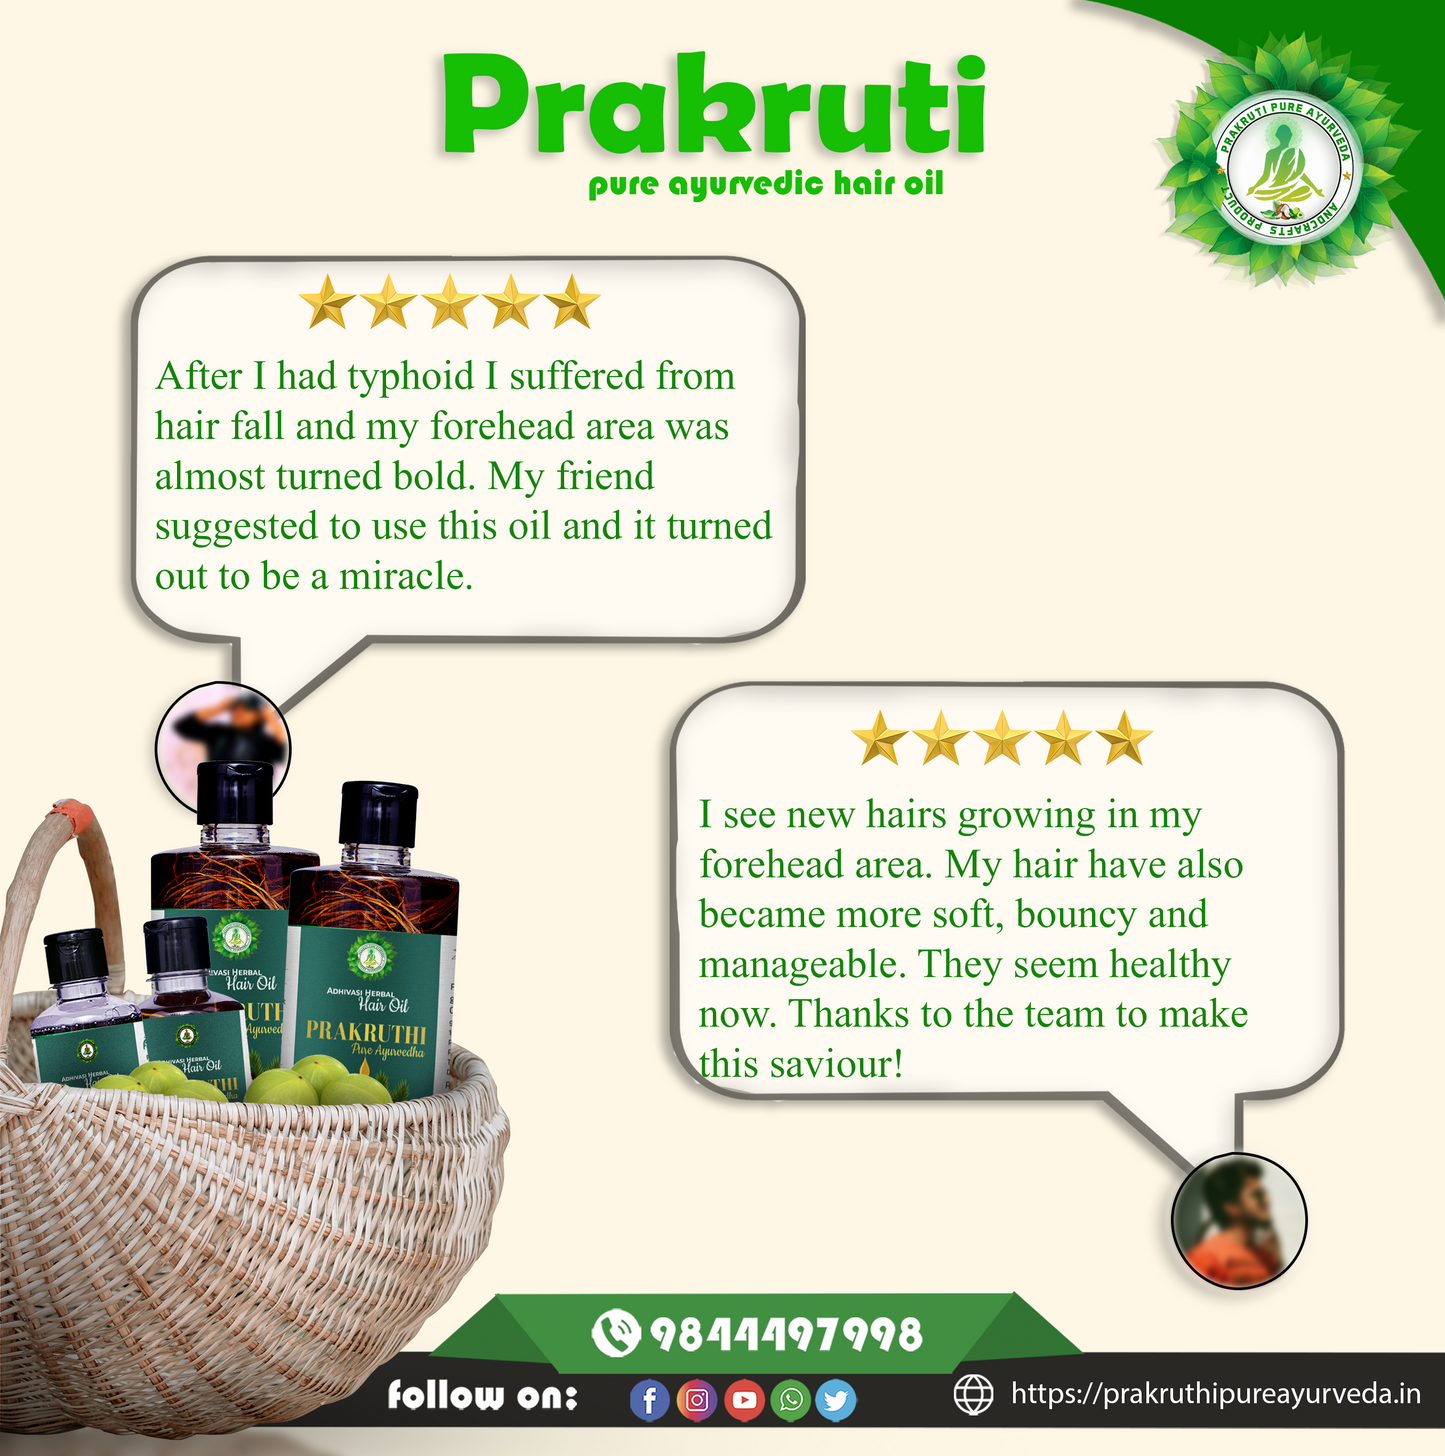 🔻500ML Adivasi Prakruthi Pure Ayurveda hair oil( Long hair Growth hair and white hair 4 Month corse package )